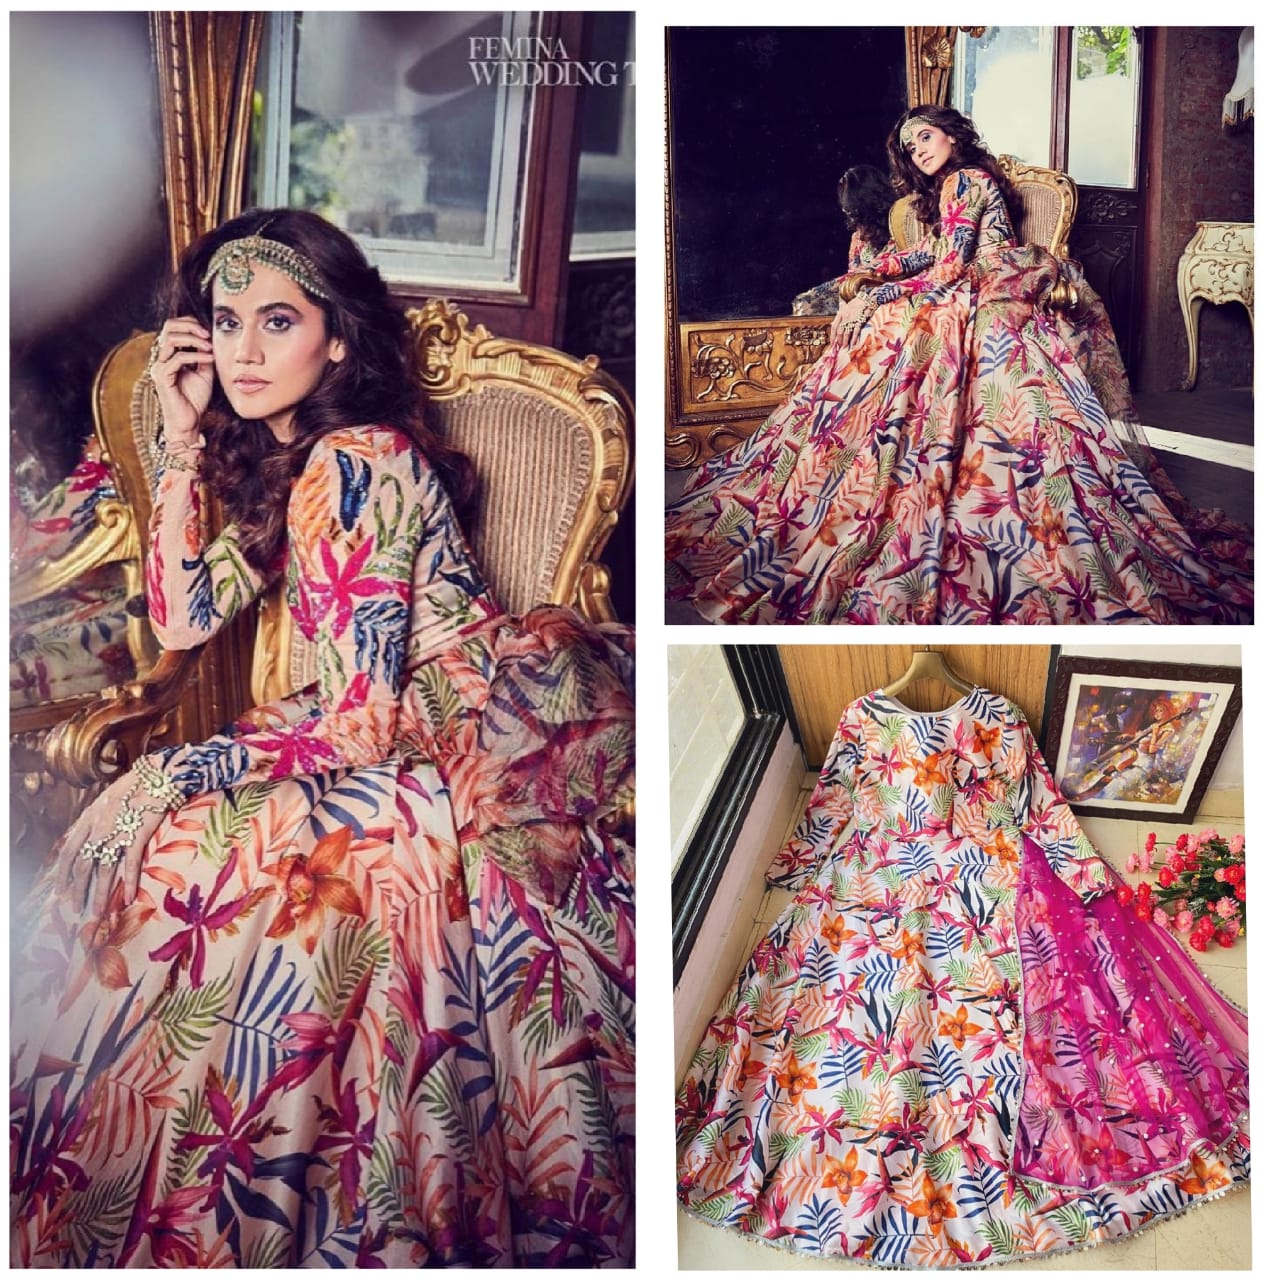 Bollywood Gown New Designer Wedding Party Indian Wear Salwar Kameez New  Year | eBay